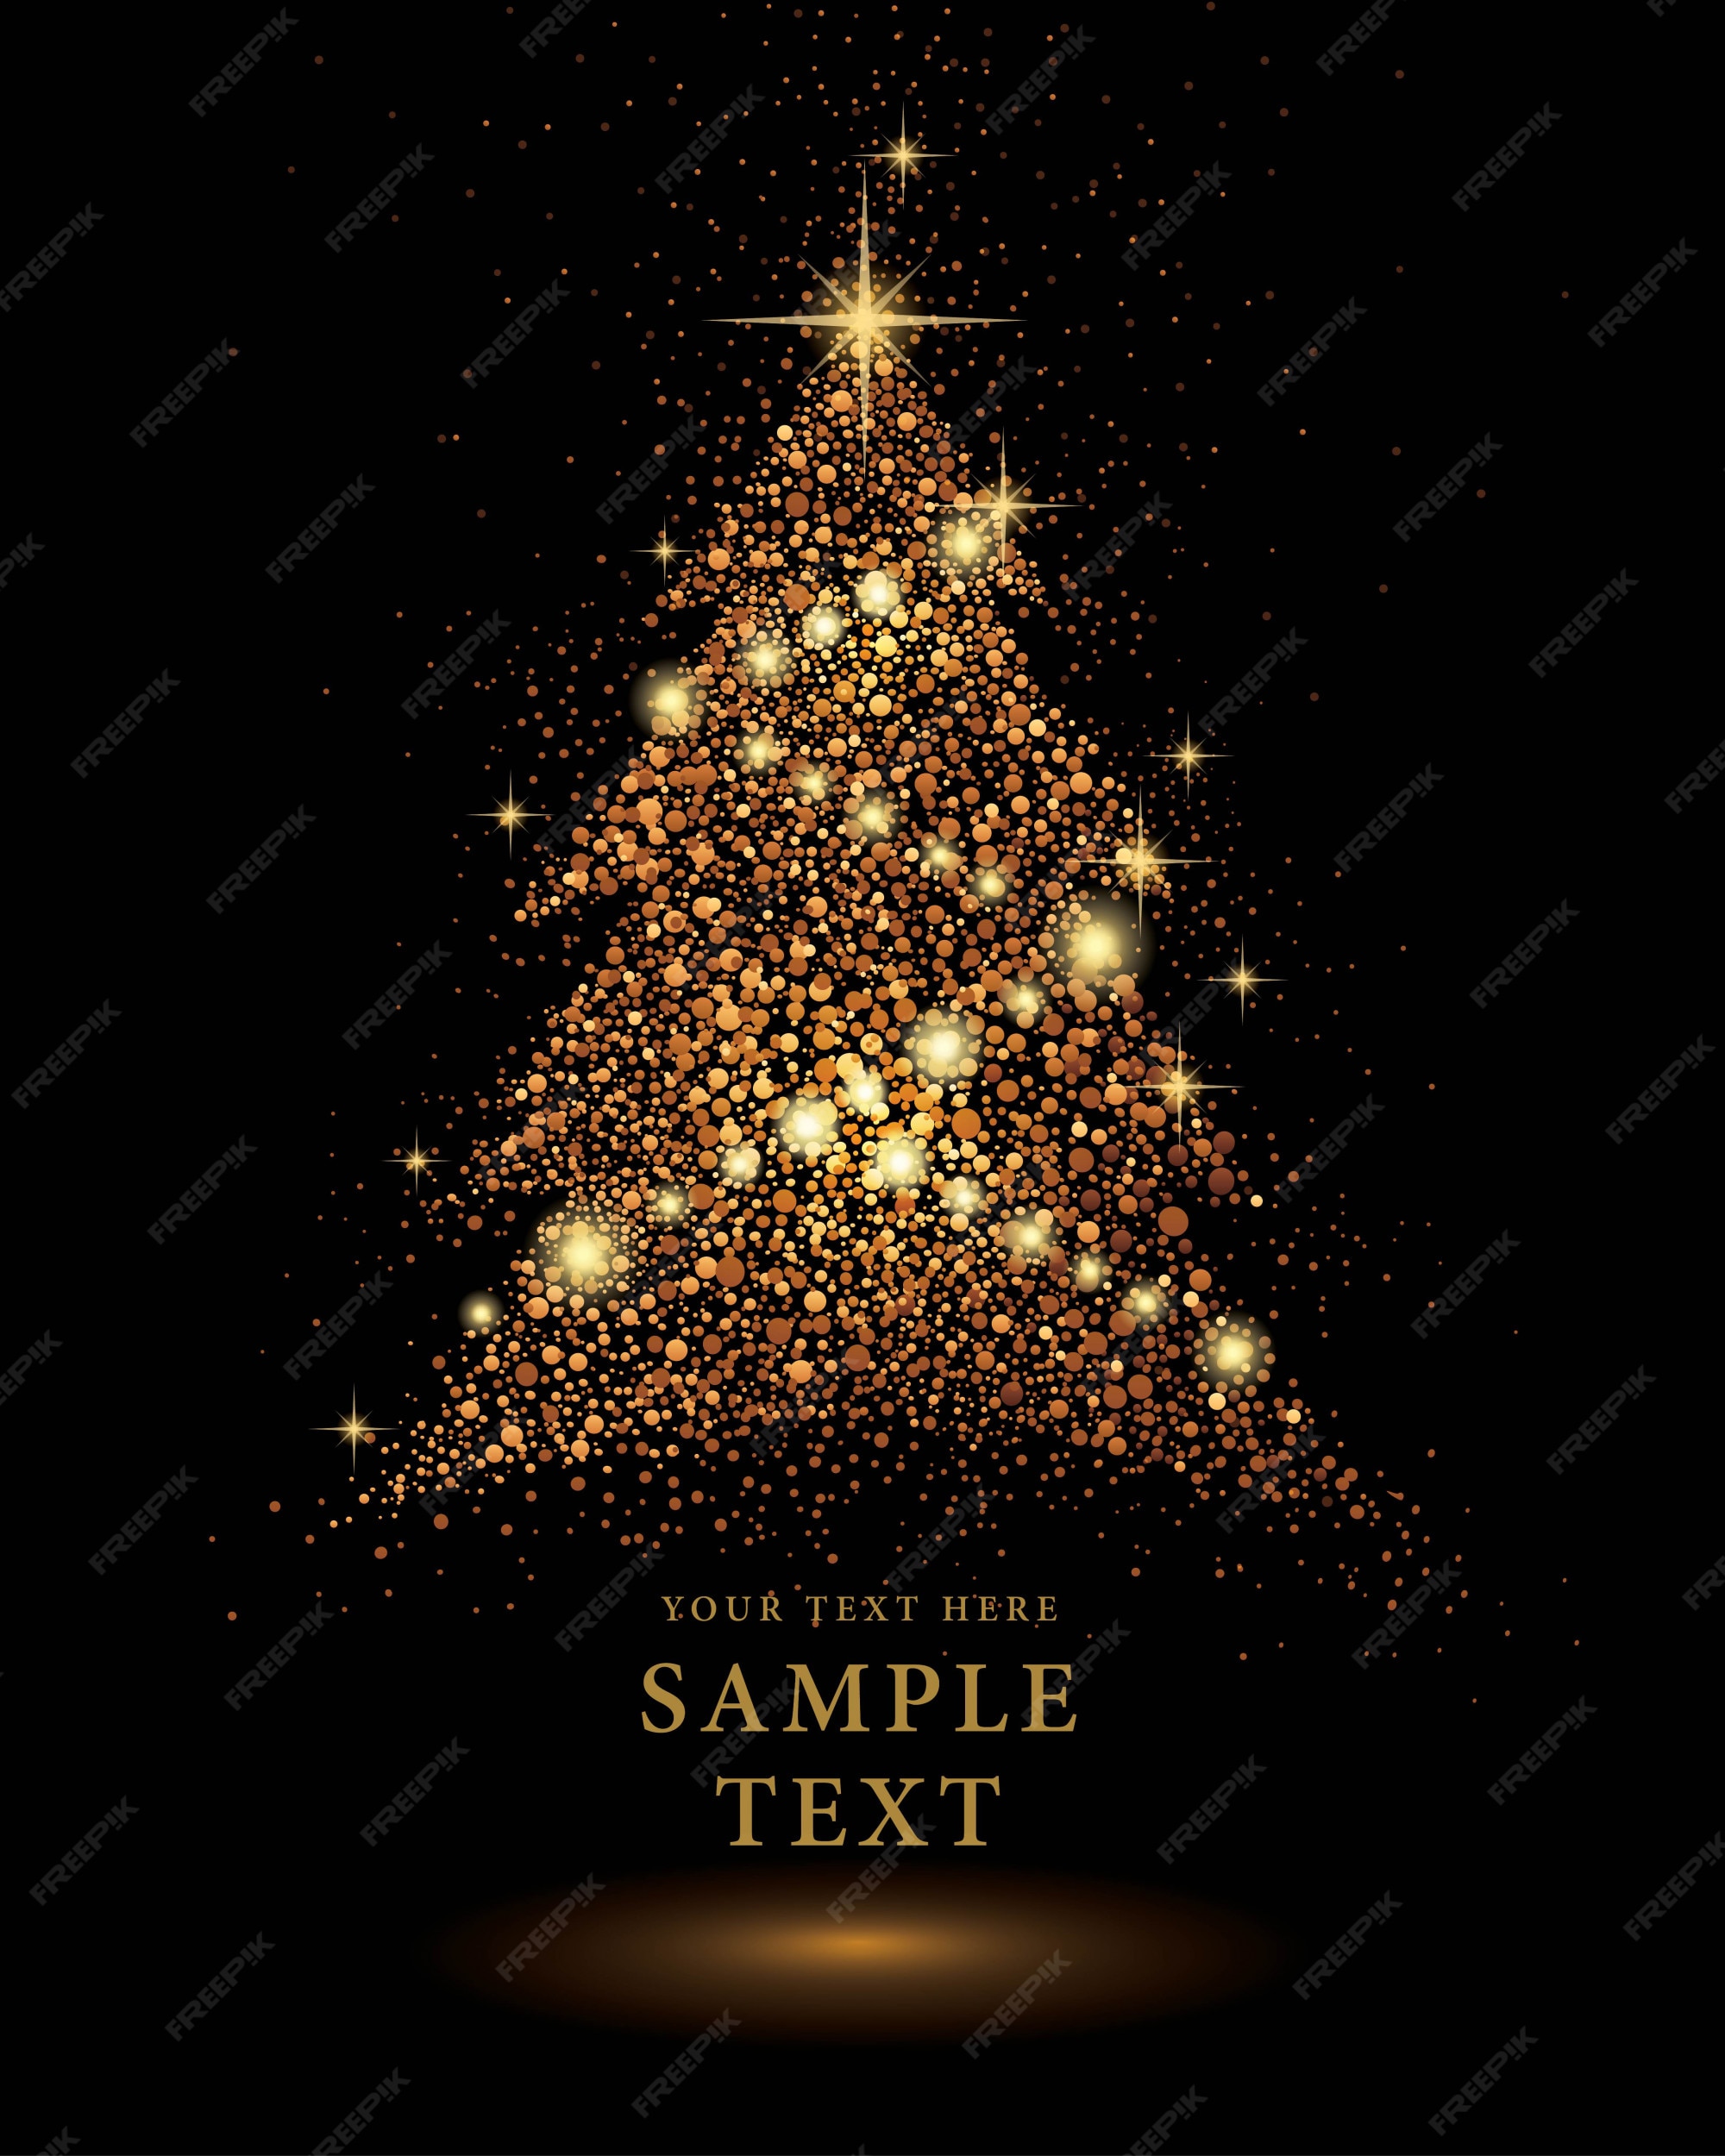 Premium Vector | Gold glitter christmas tree vector on black ...